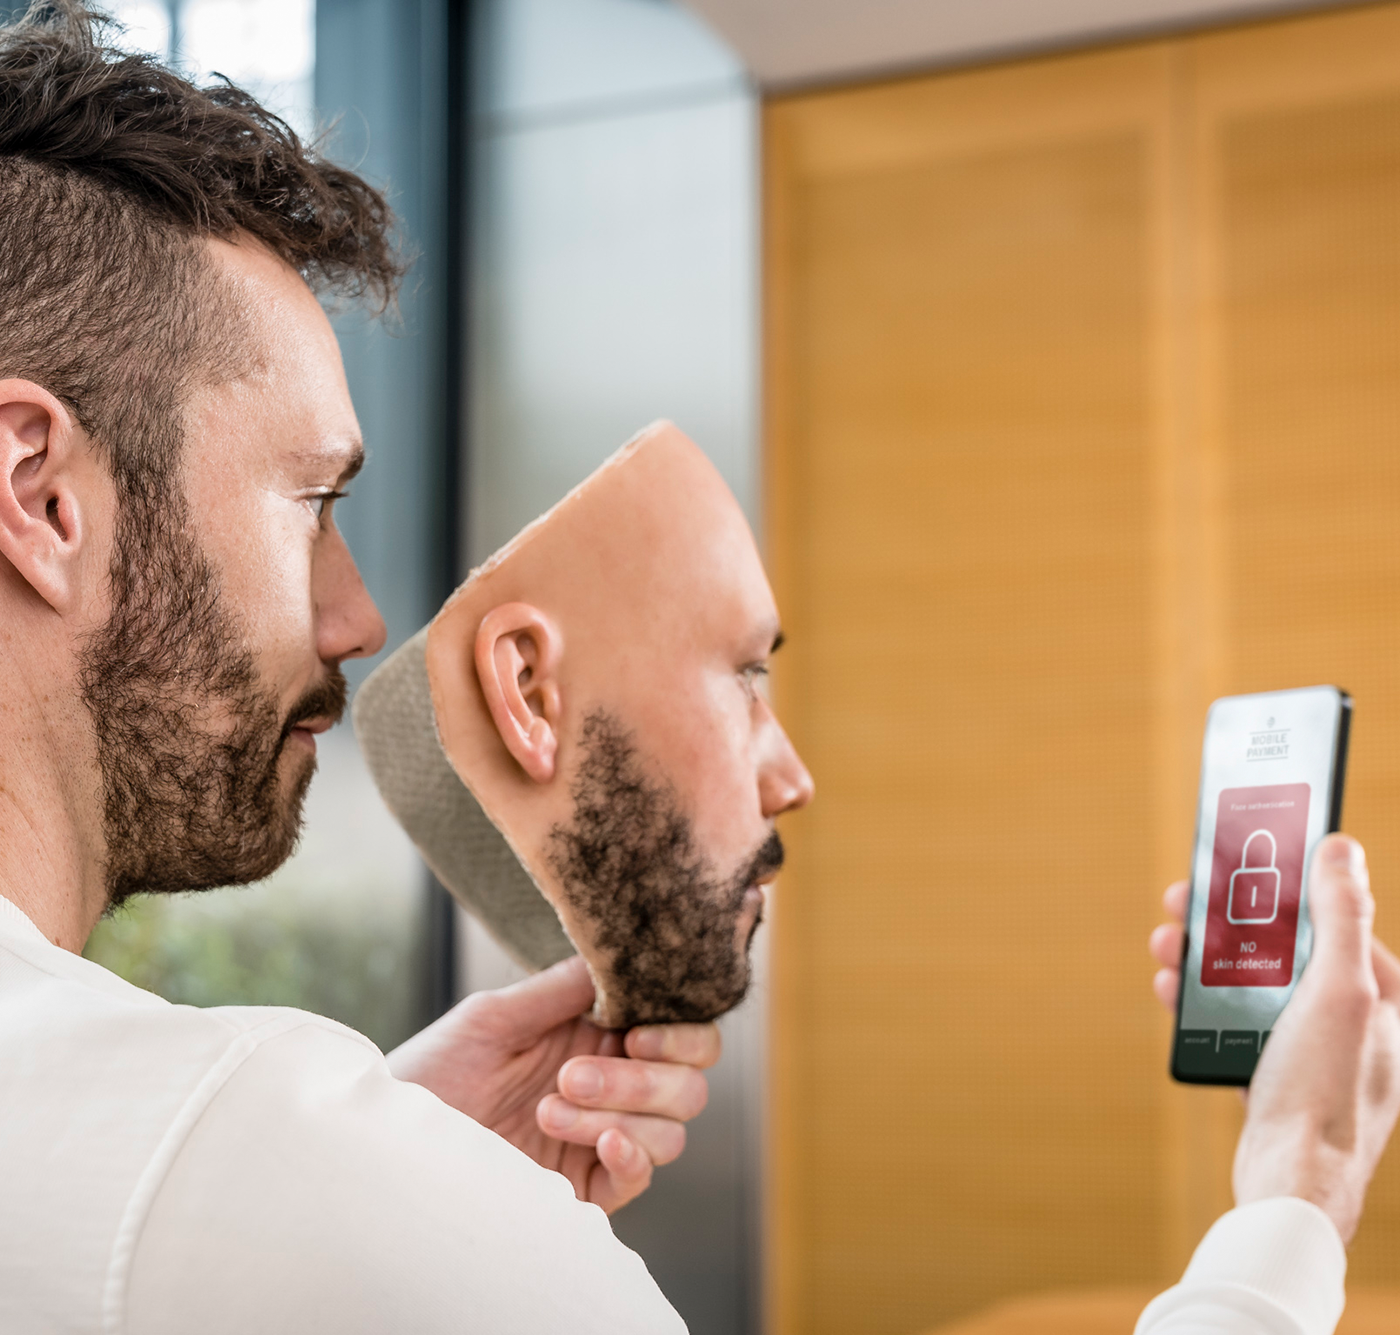 trinamiX 3D Imaging Mobile Payment: spoof-proof face authentication